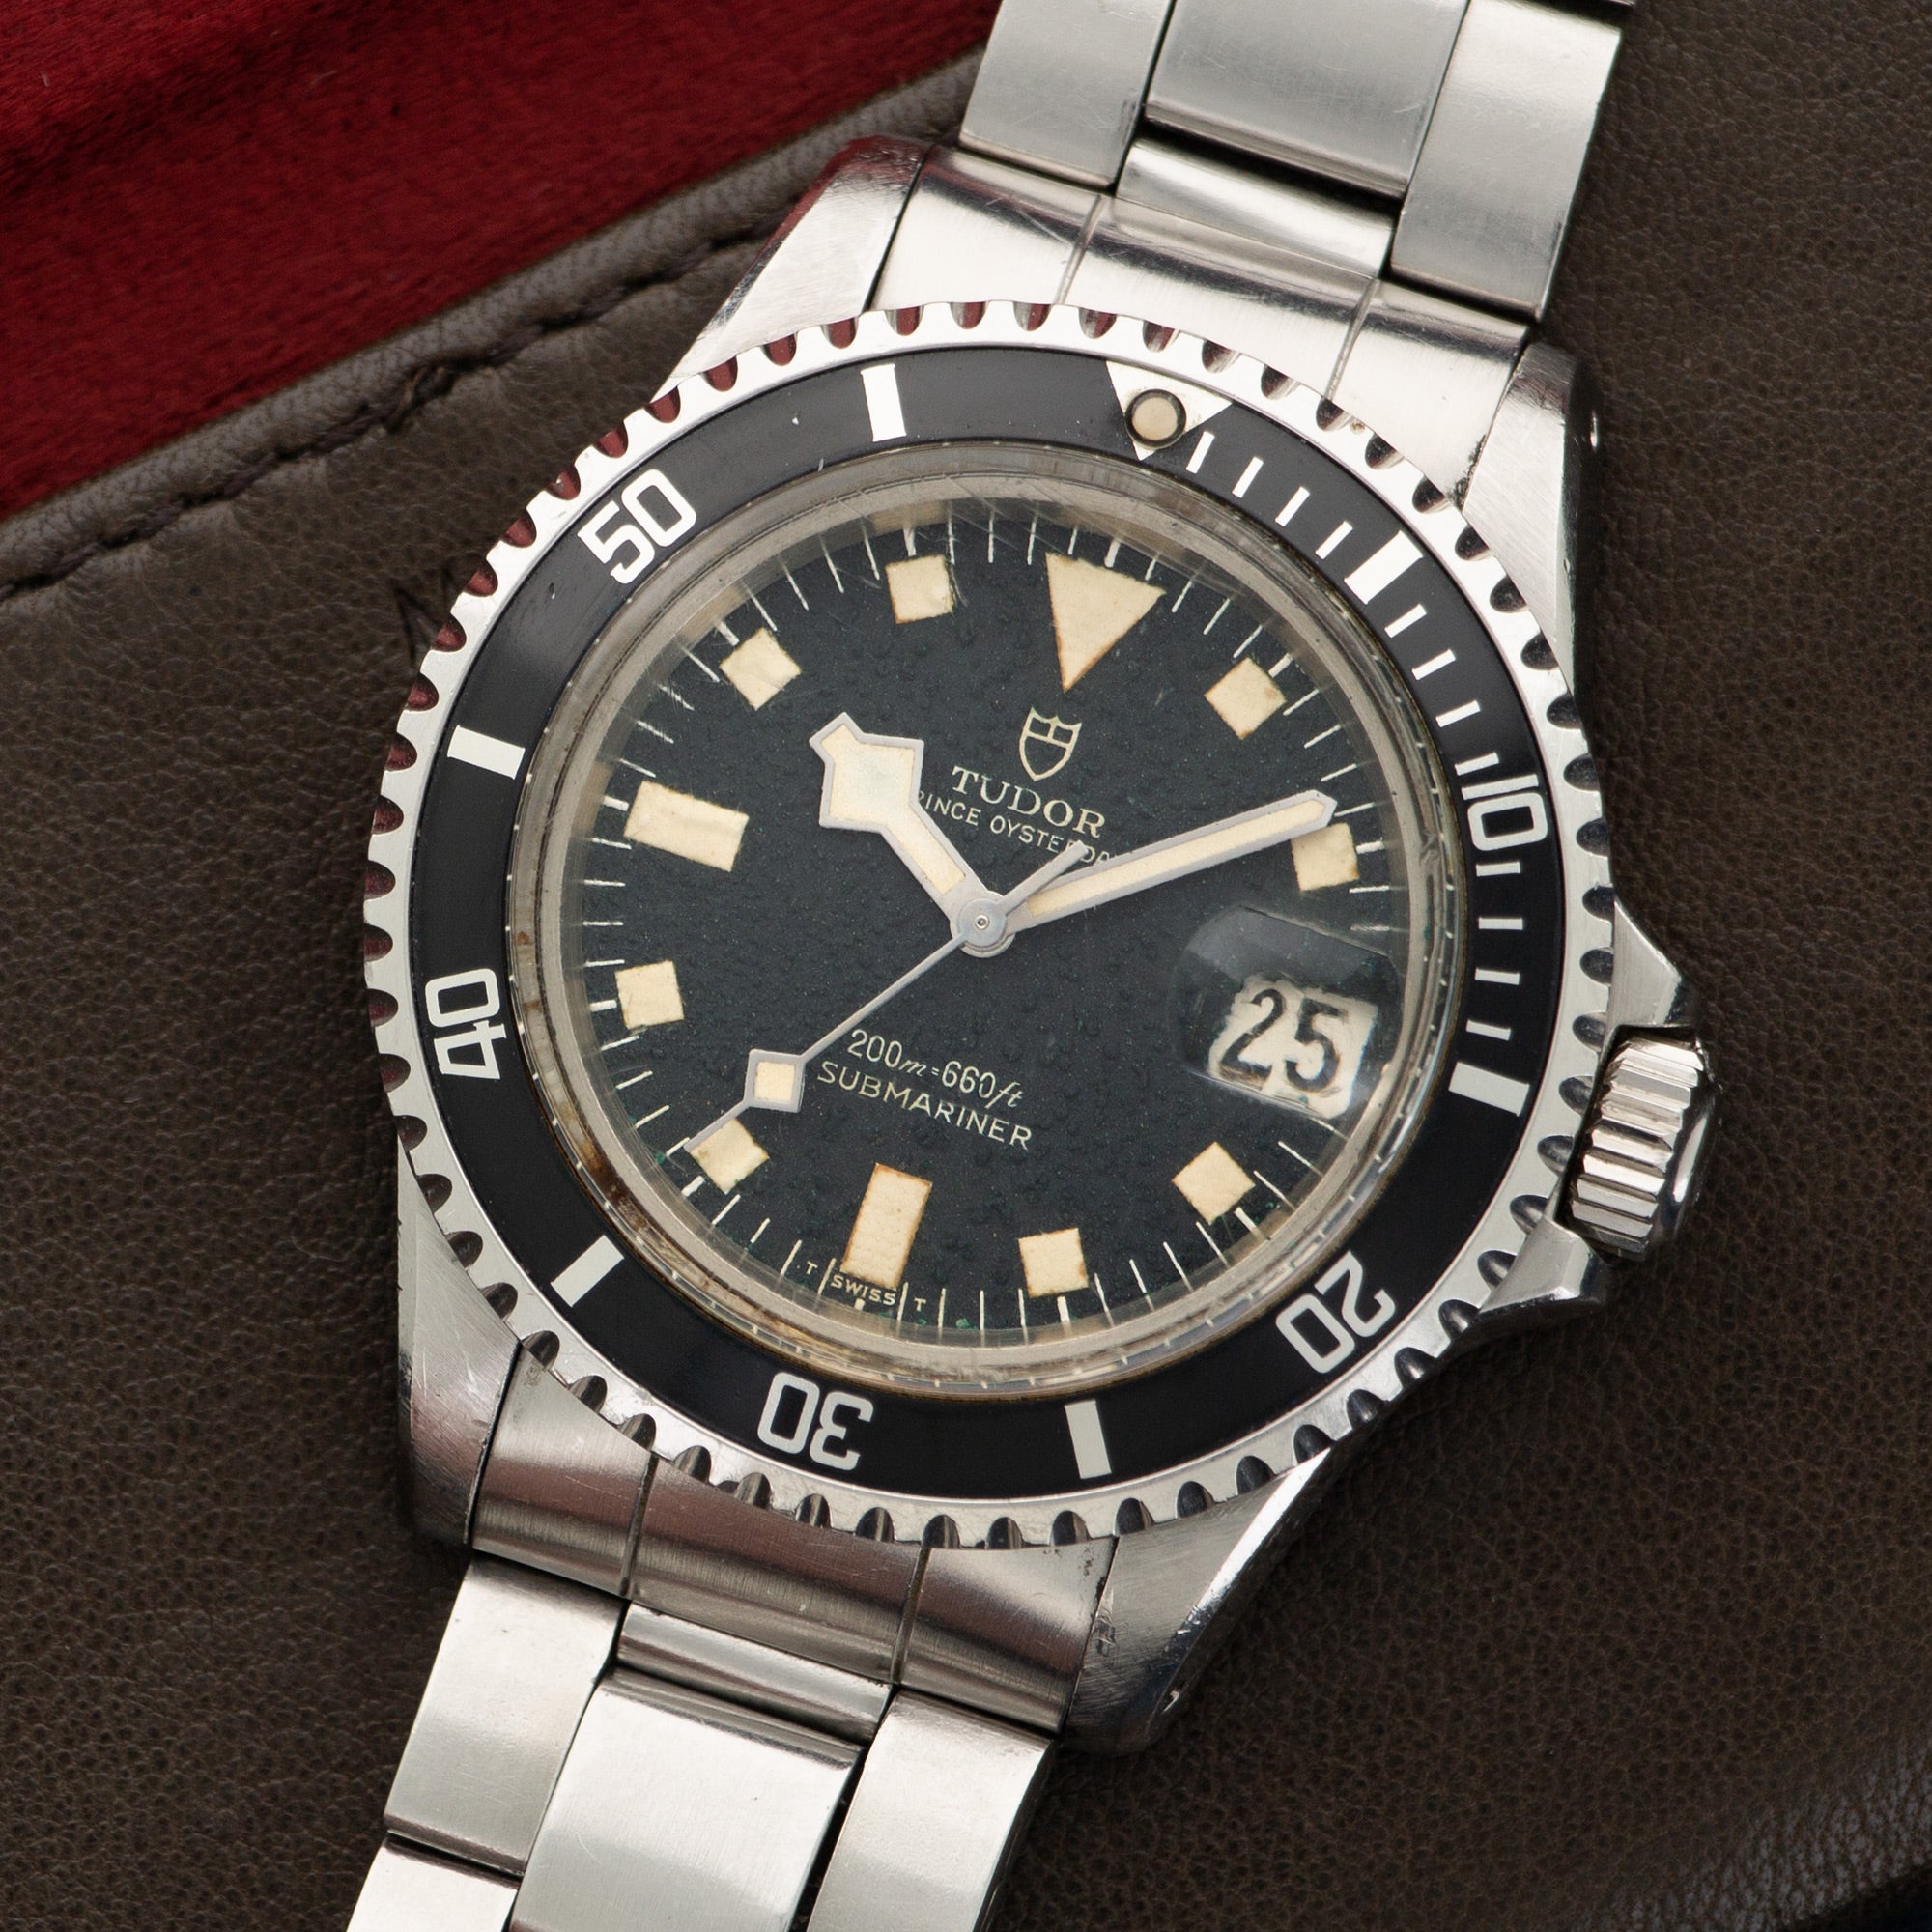 Tudor - Tudor Submariner Snowflake Watch Ref. 9411 - The Keystone Watches